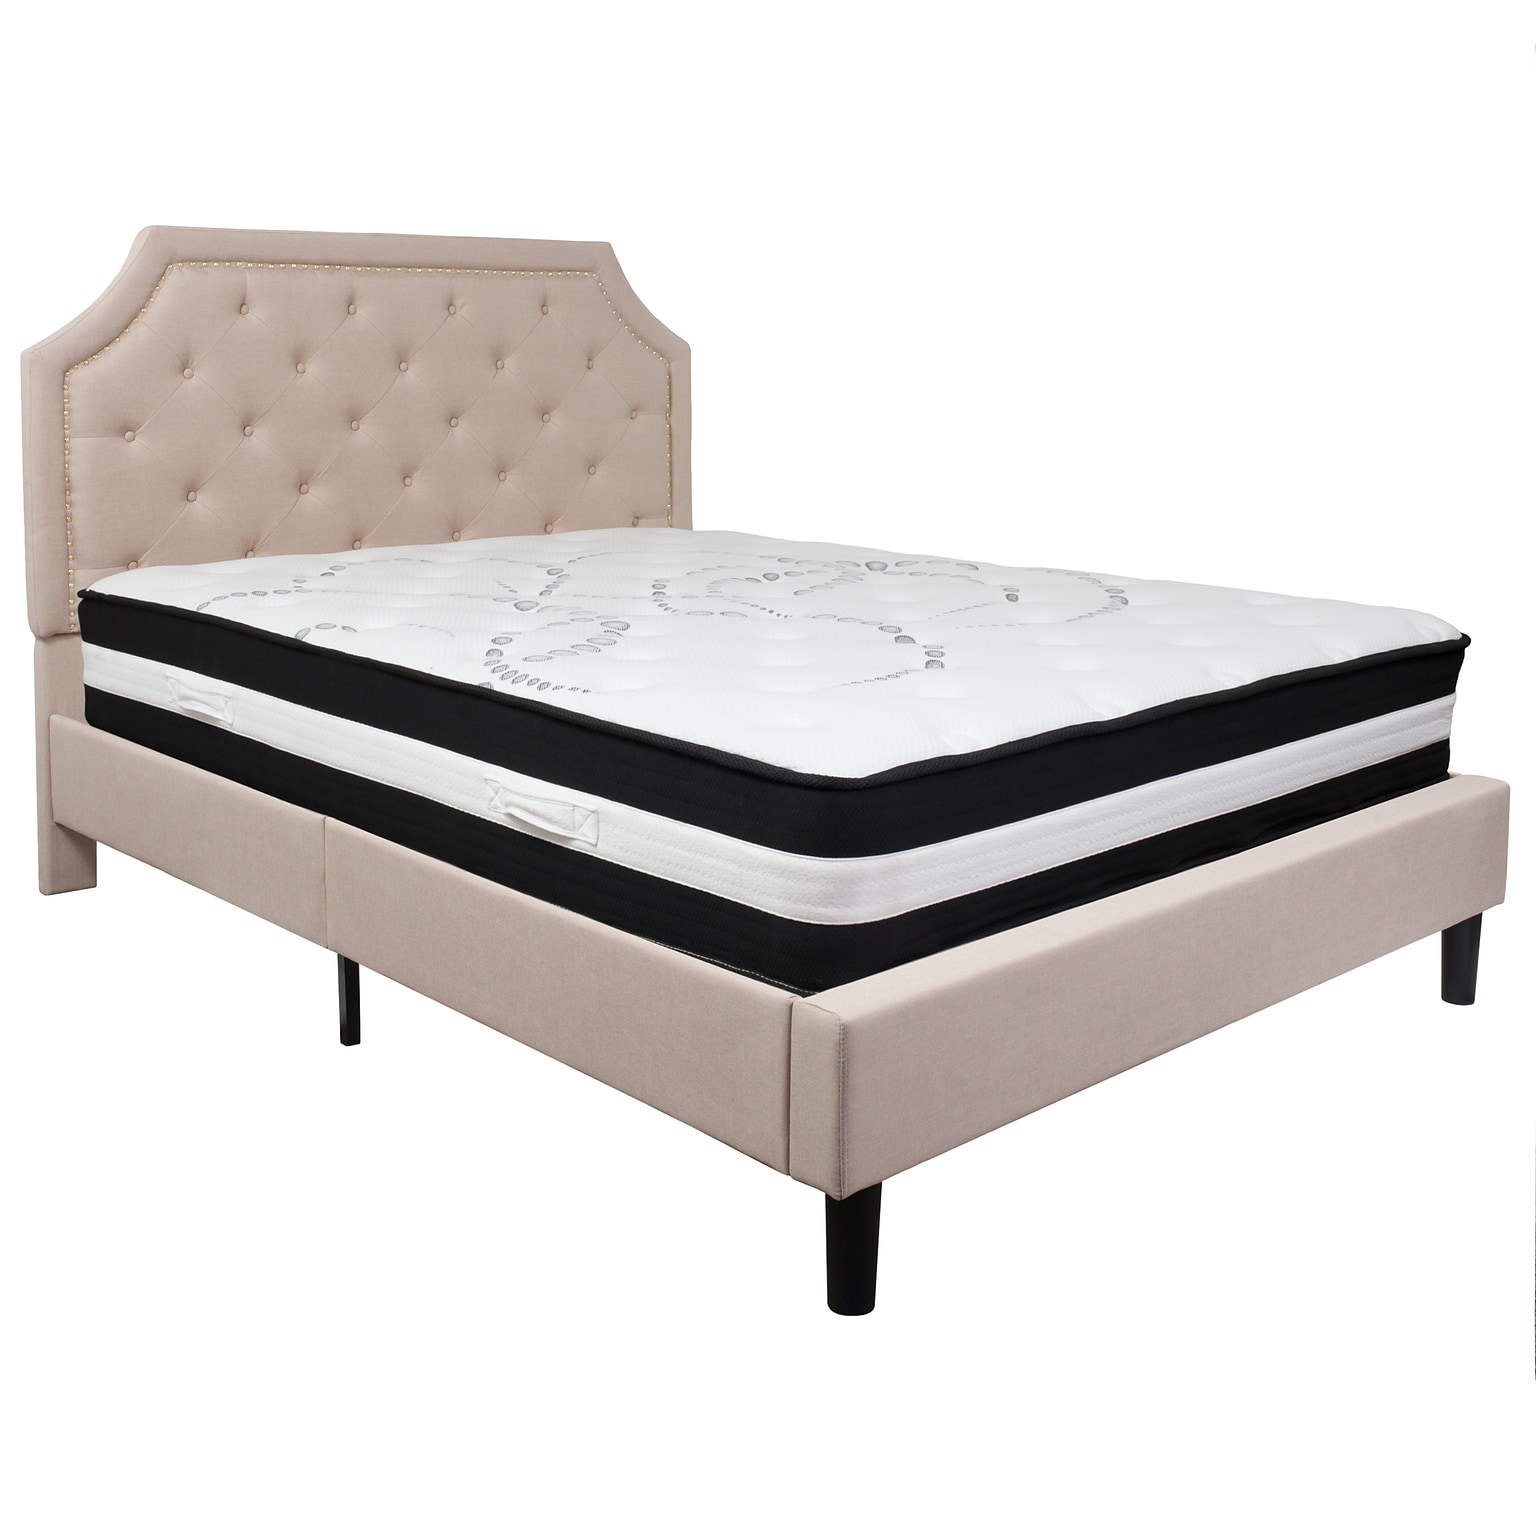 Flash Furniture Brighton Tufted Upholstered Platform Bed in Beige Fabric with Pocket Spring Mattress, Queen (SLBM3)